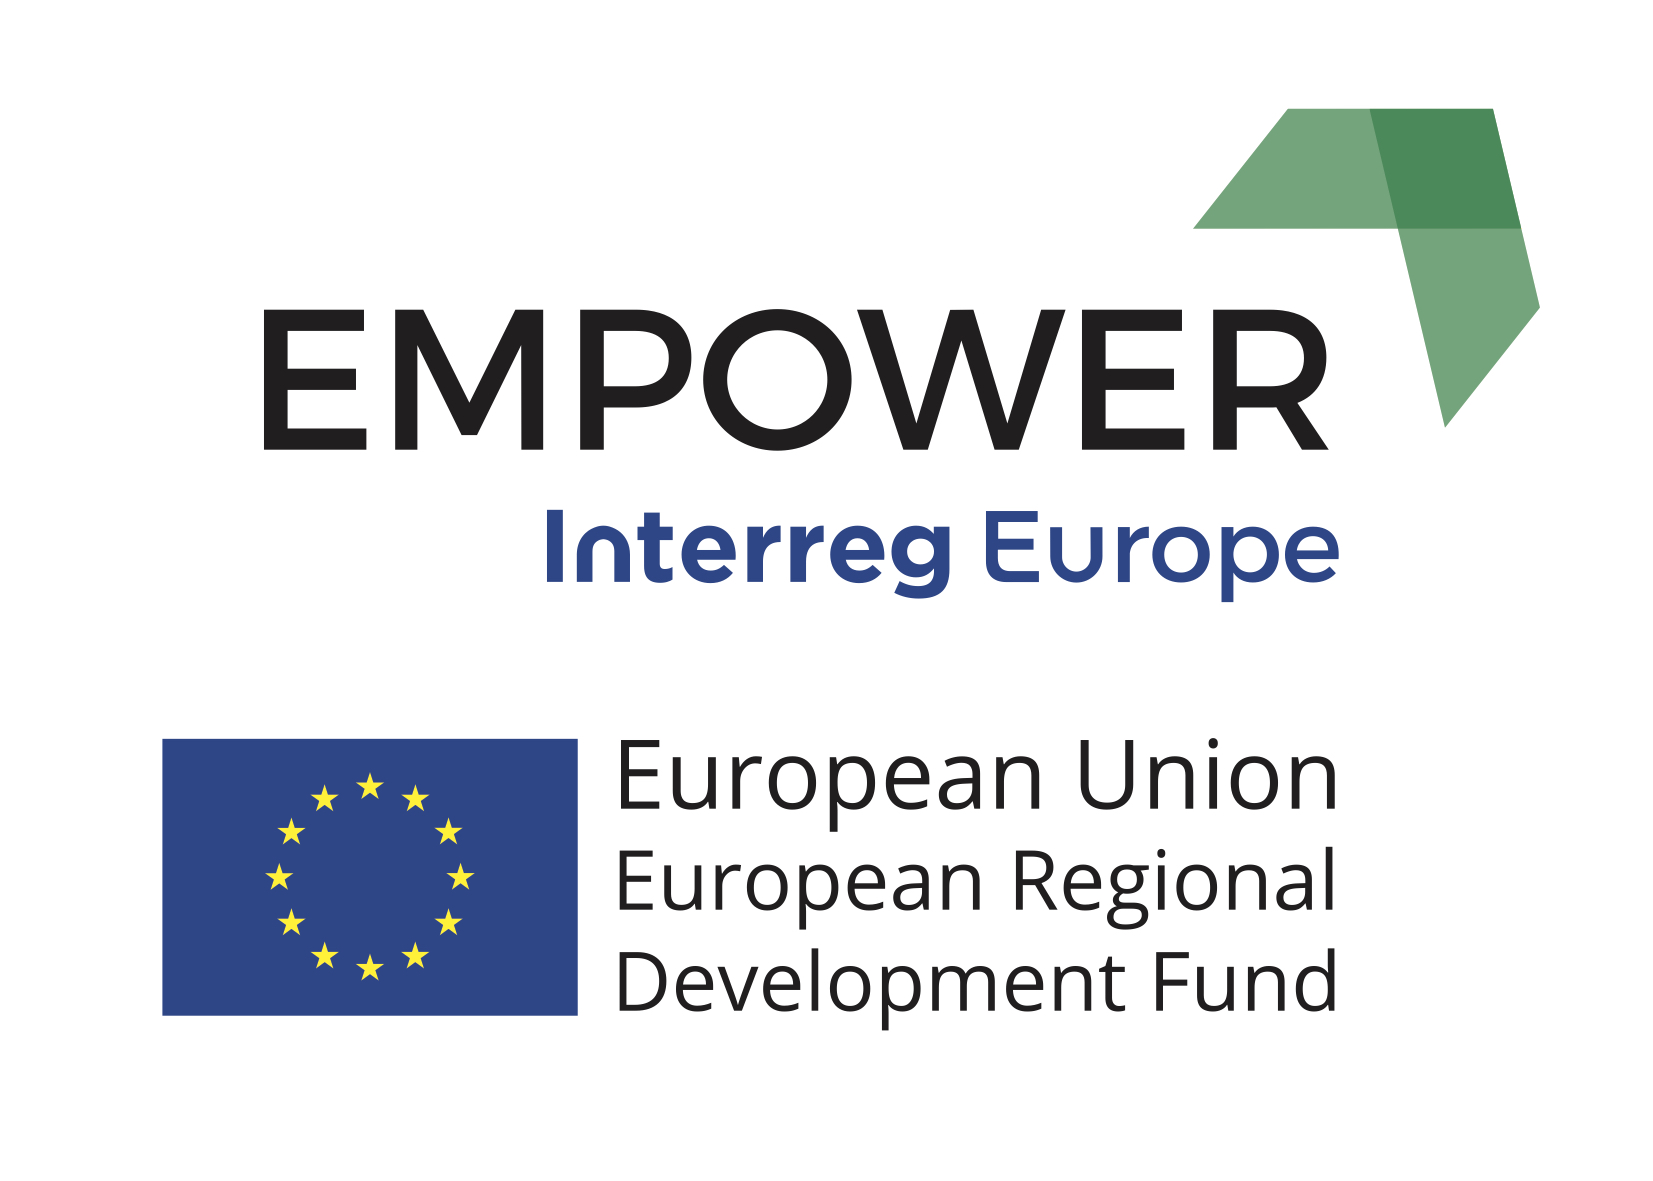 EWPOWER Interreg Europe